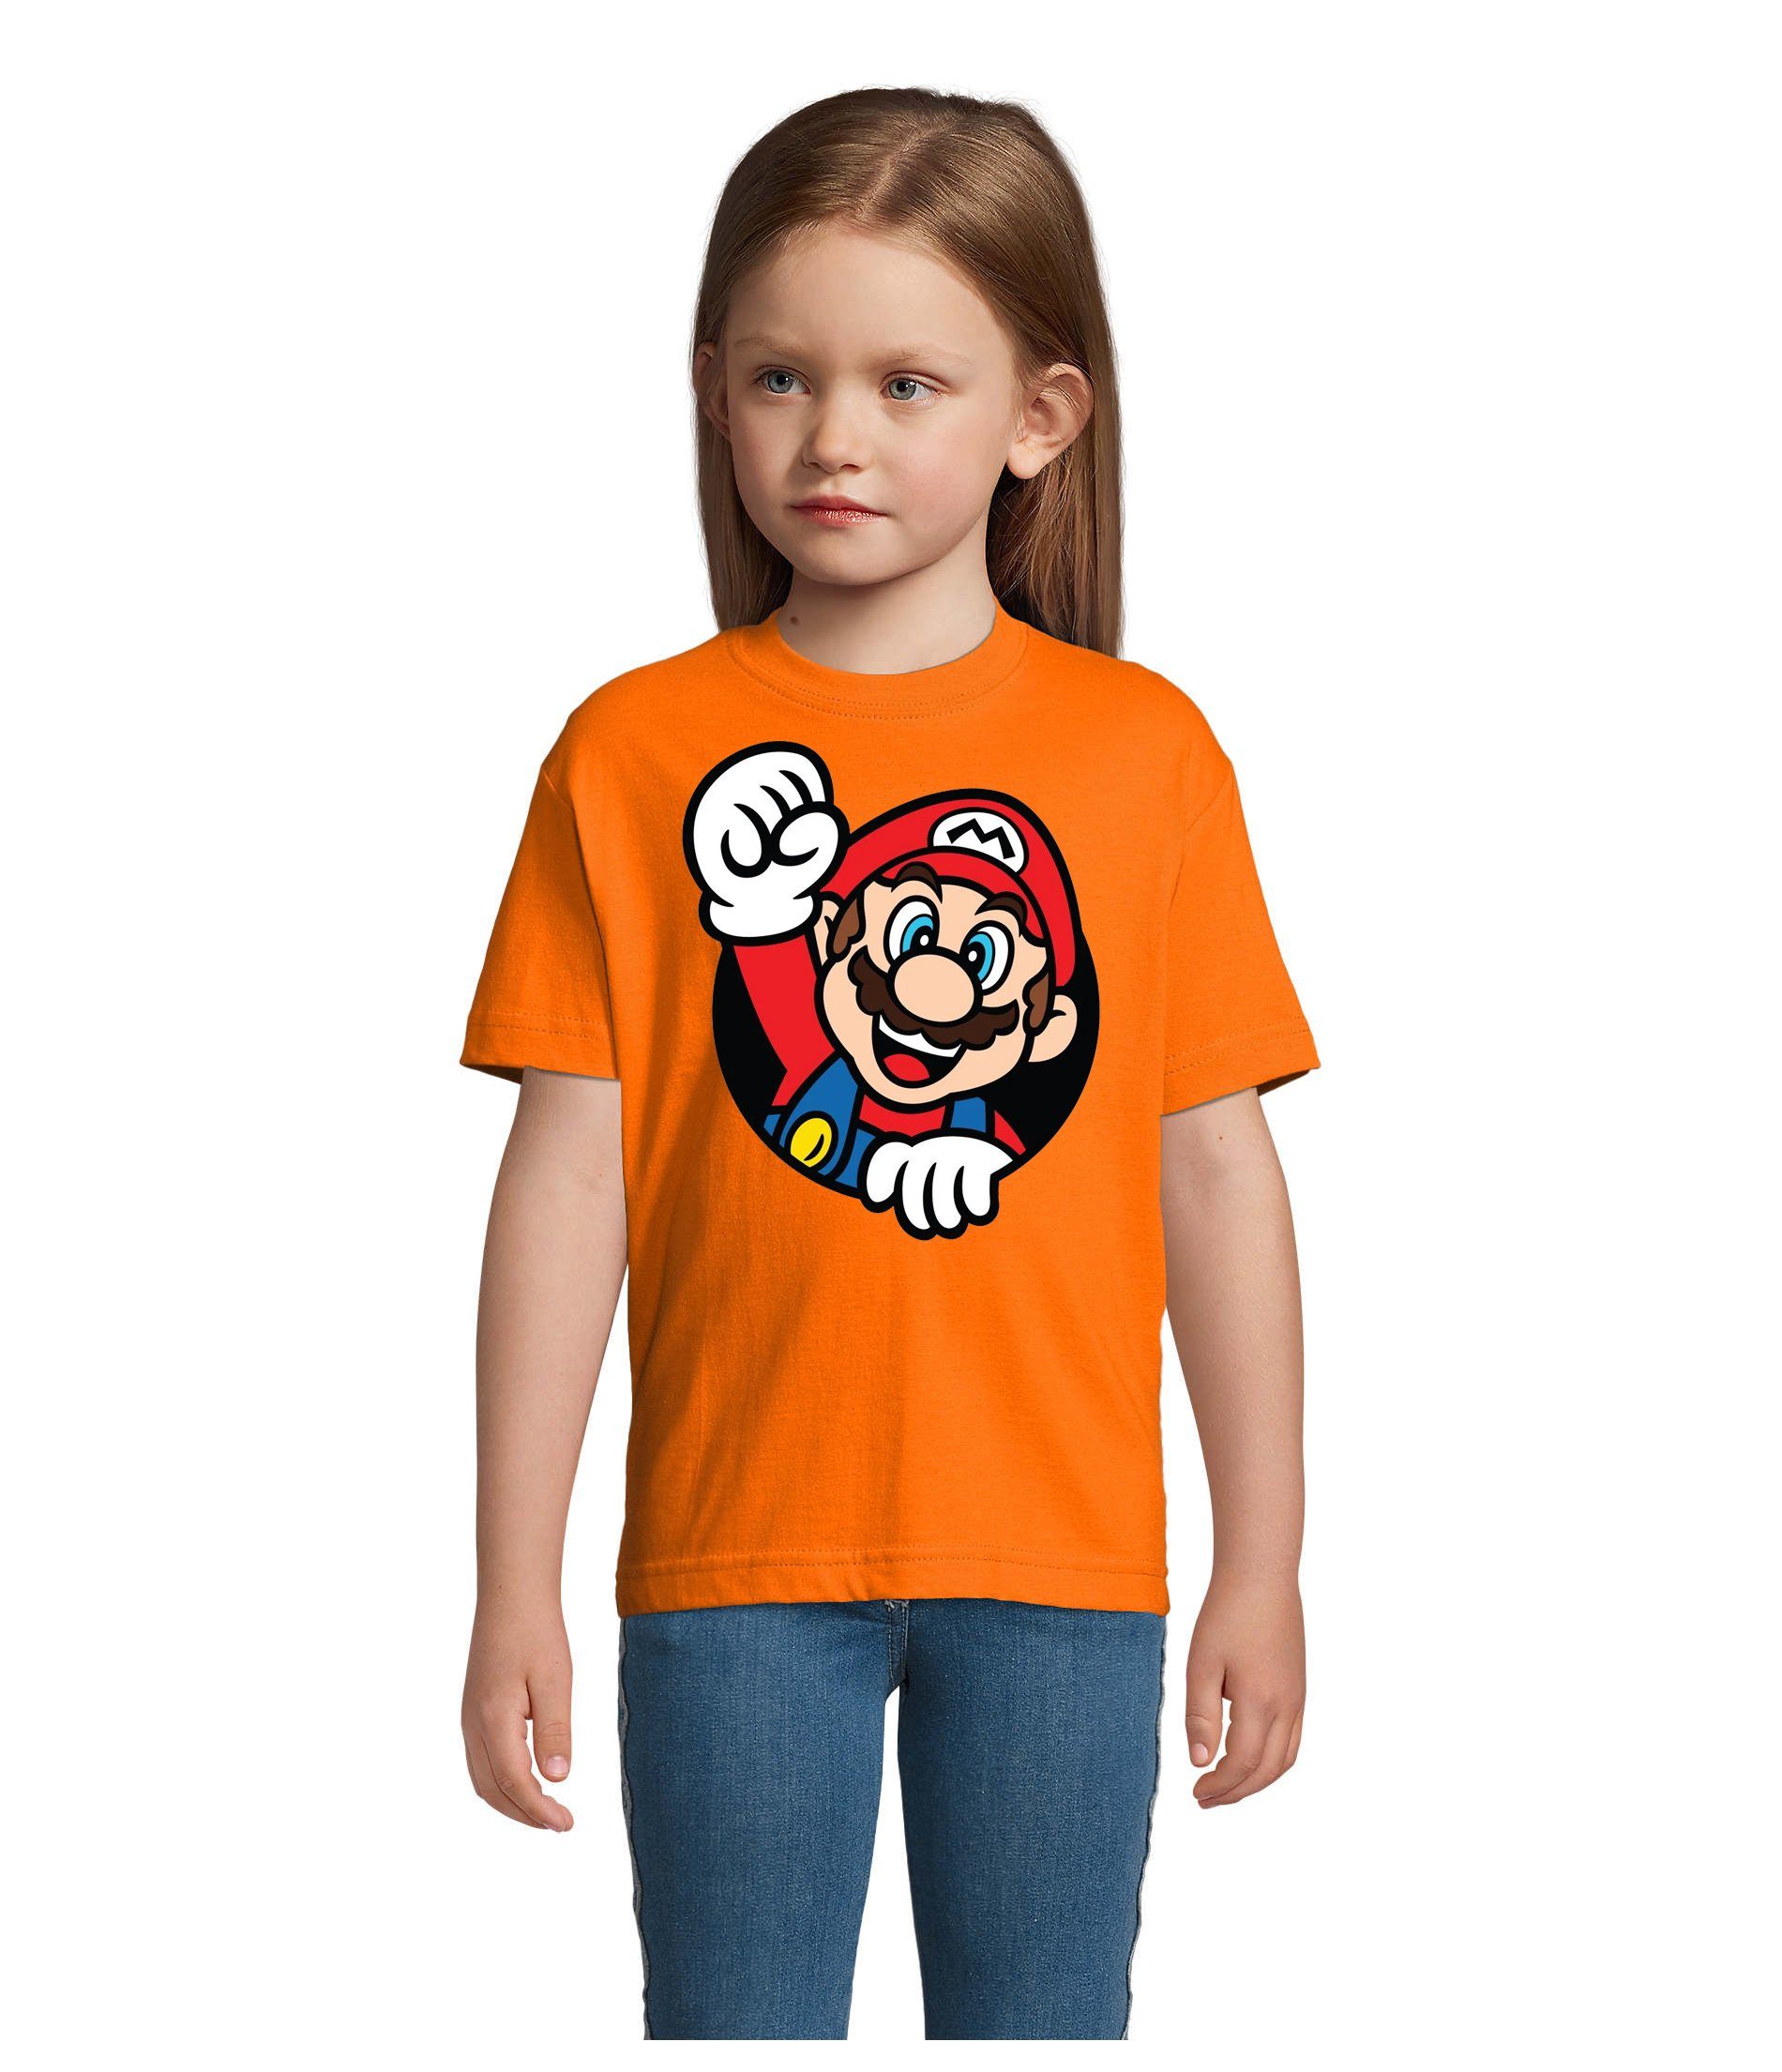 T-Shirt Kinder Konsole Faust Gaming Nintendo Spiel & Nerd Konsole Blondie Orange Super Mario Brownie